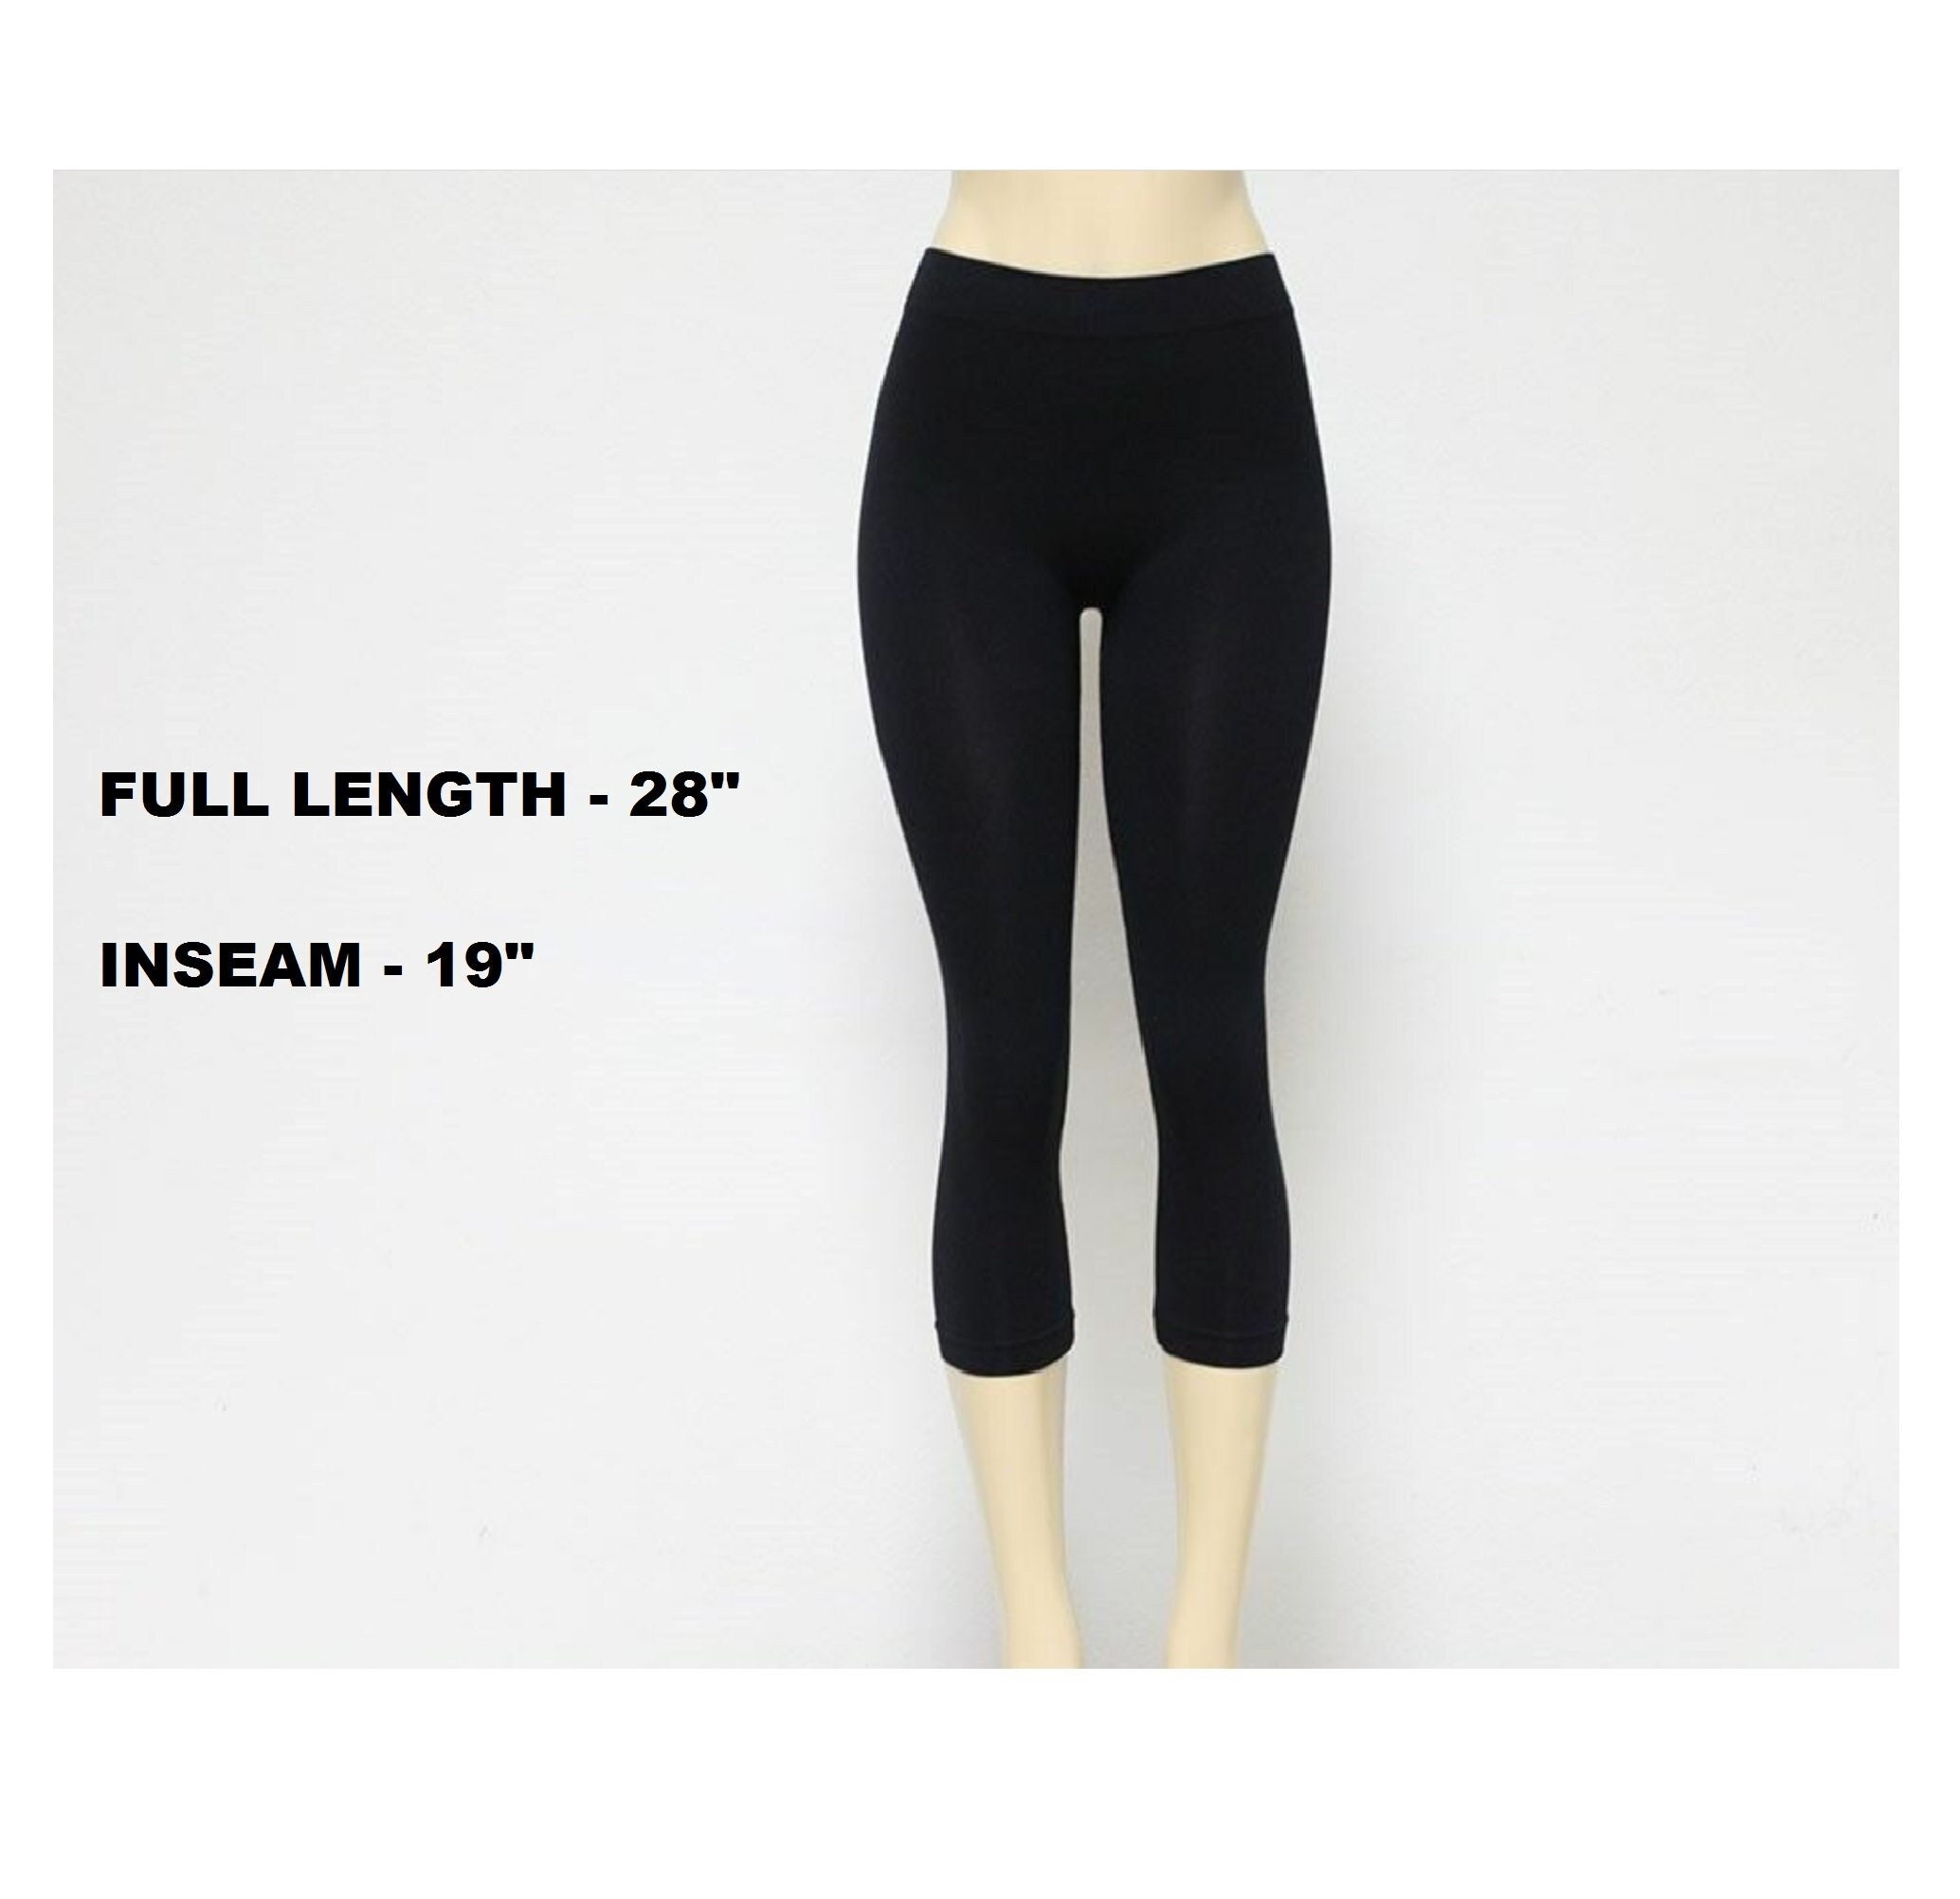 Premium Lycra/nylon Leggings Women's High Waist Soft Yoga Pants